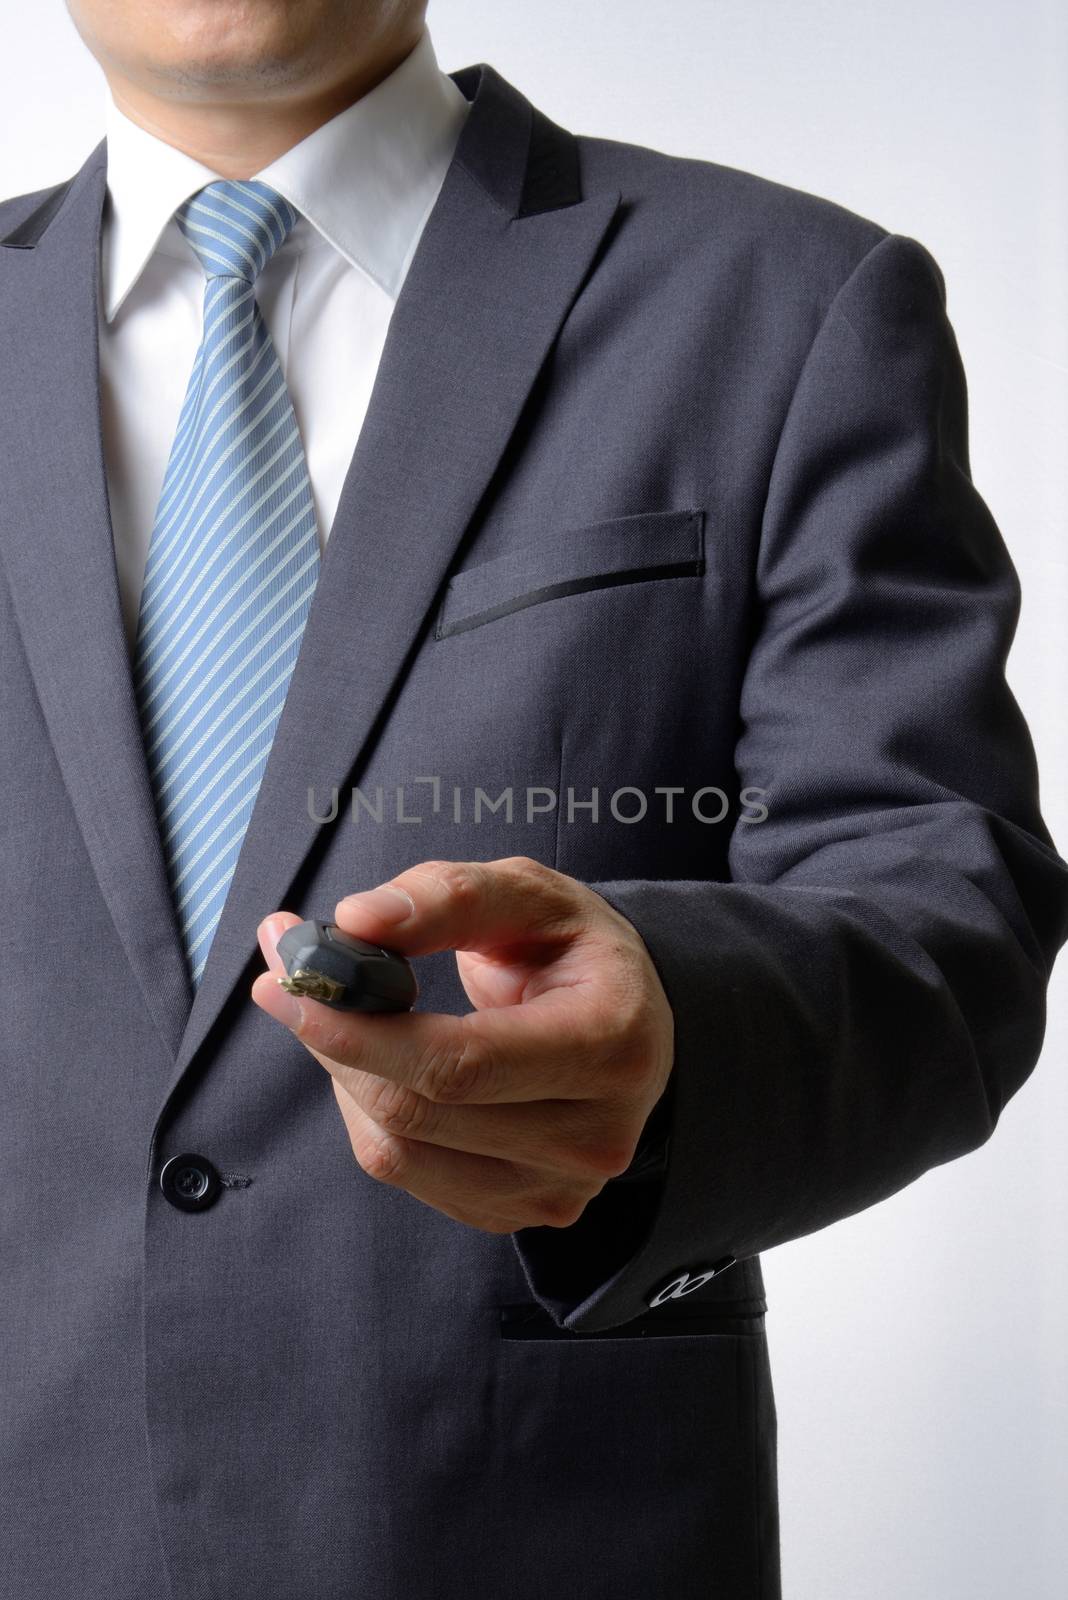 Businessman pushing remote a car key on white background